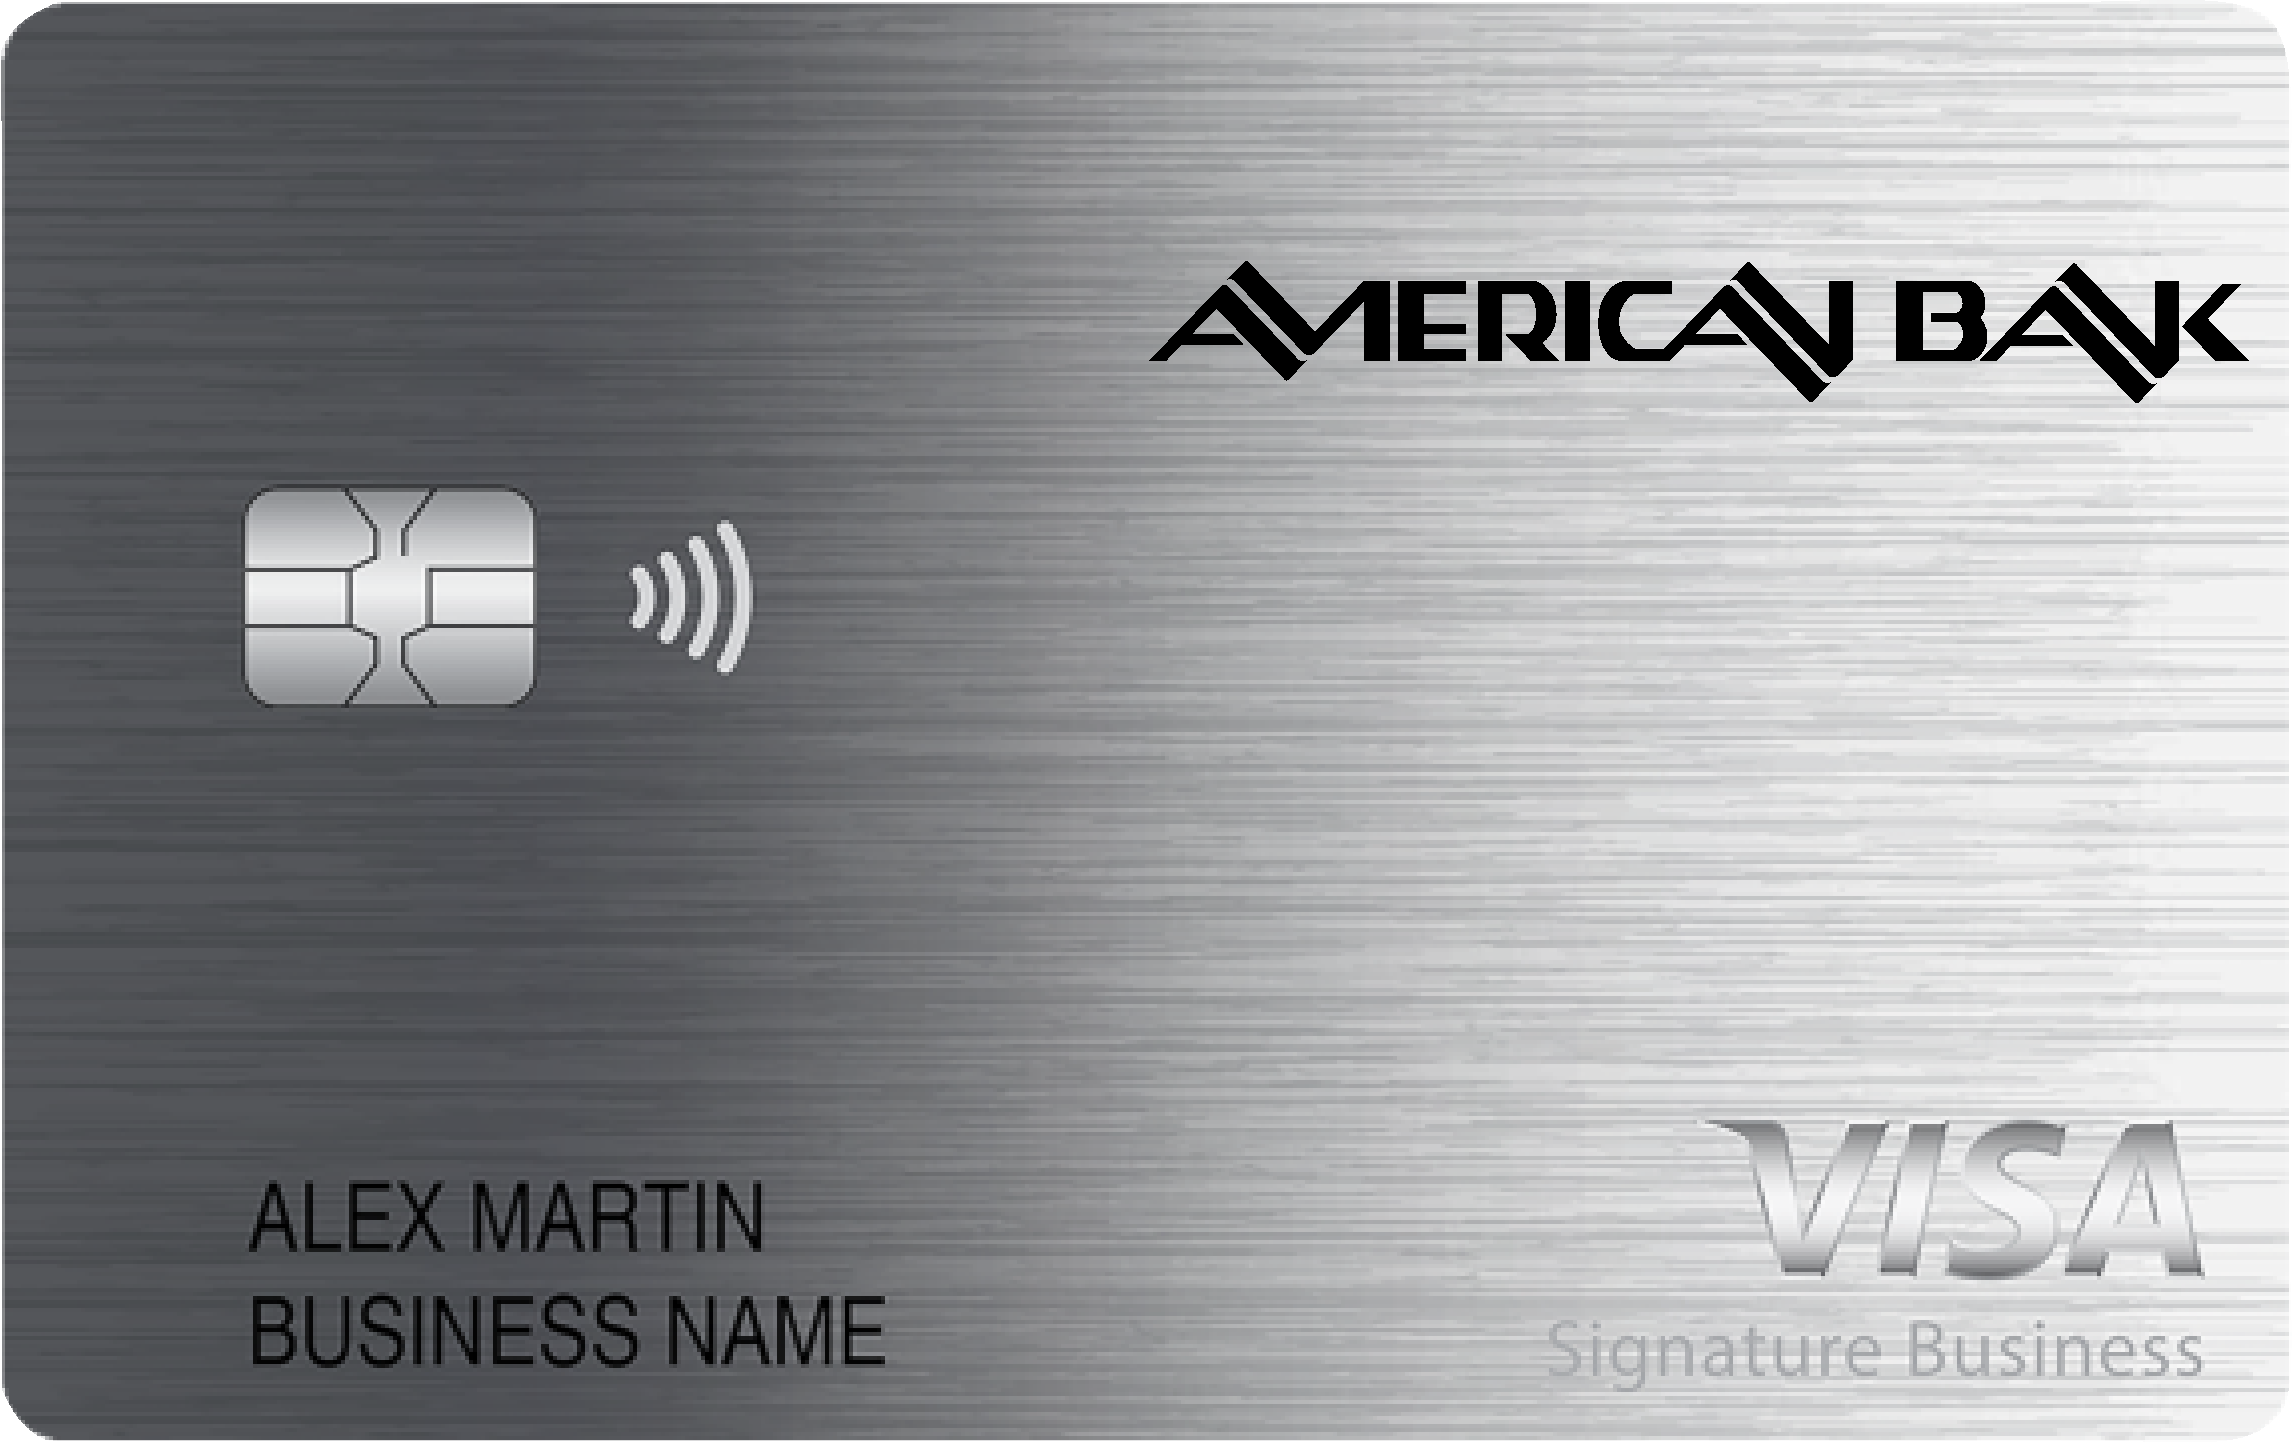 American Bank Smart Business Rewards Card